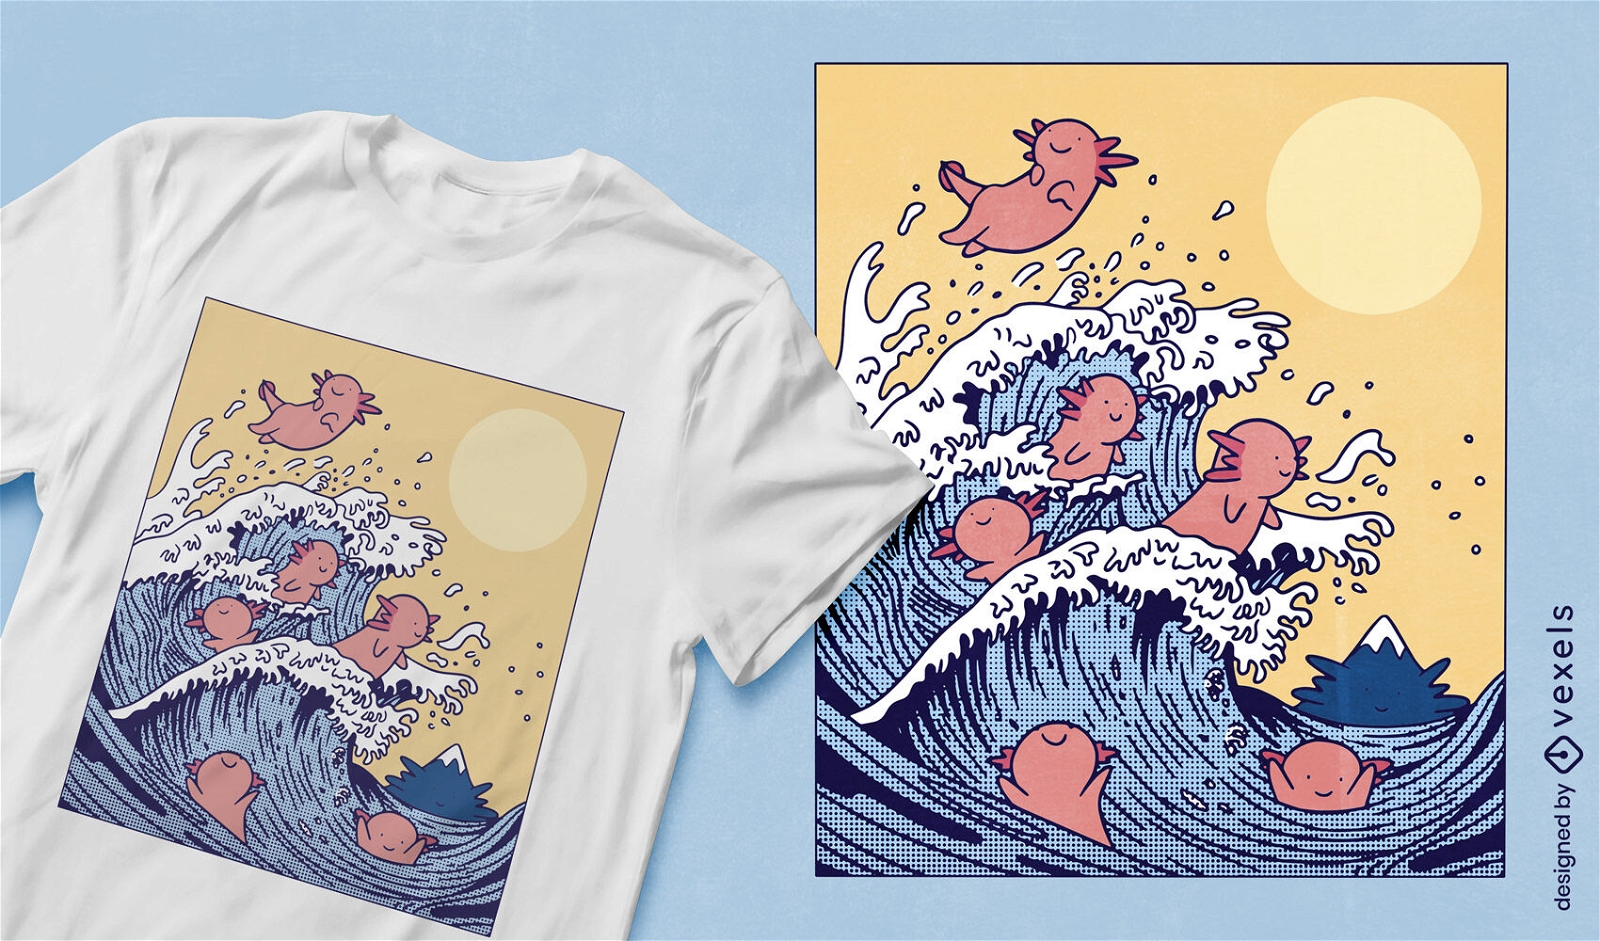 Diseño de camiseta Axolotls en onda.